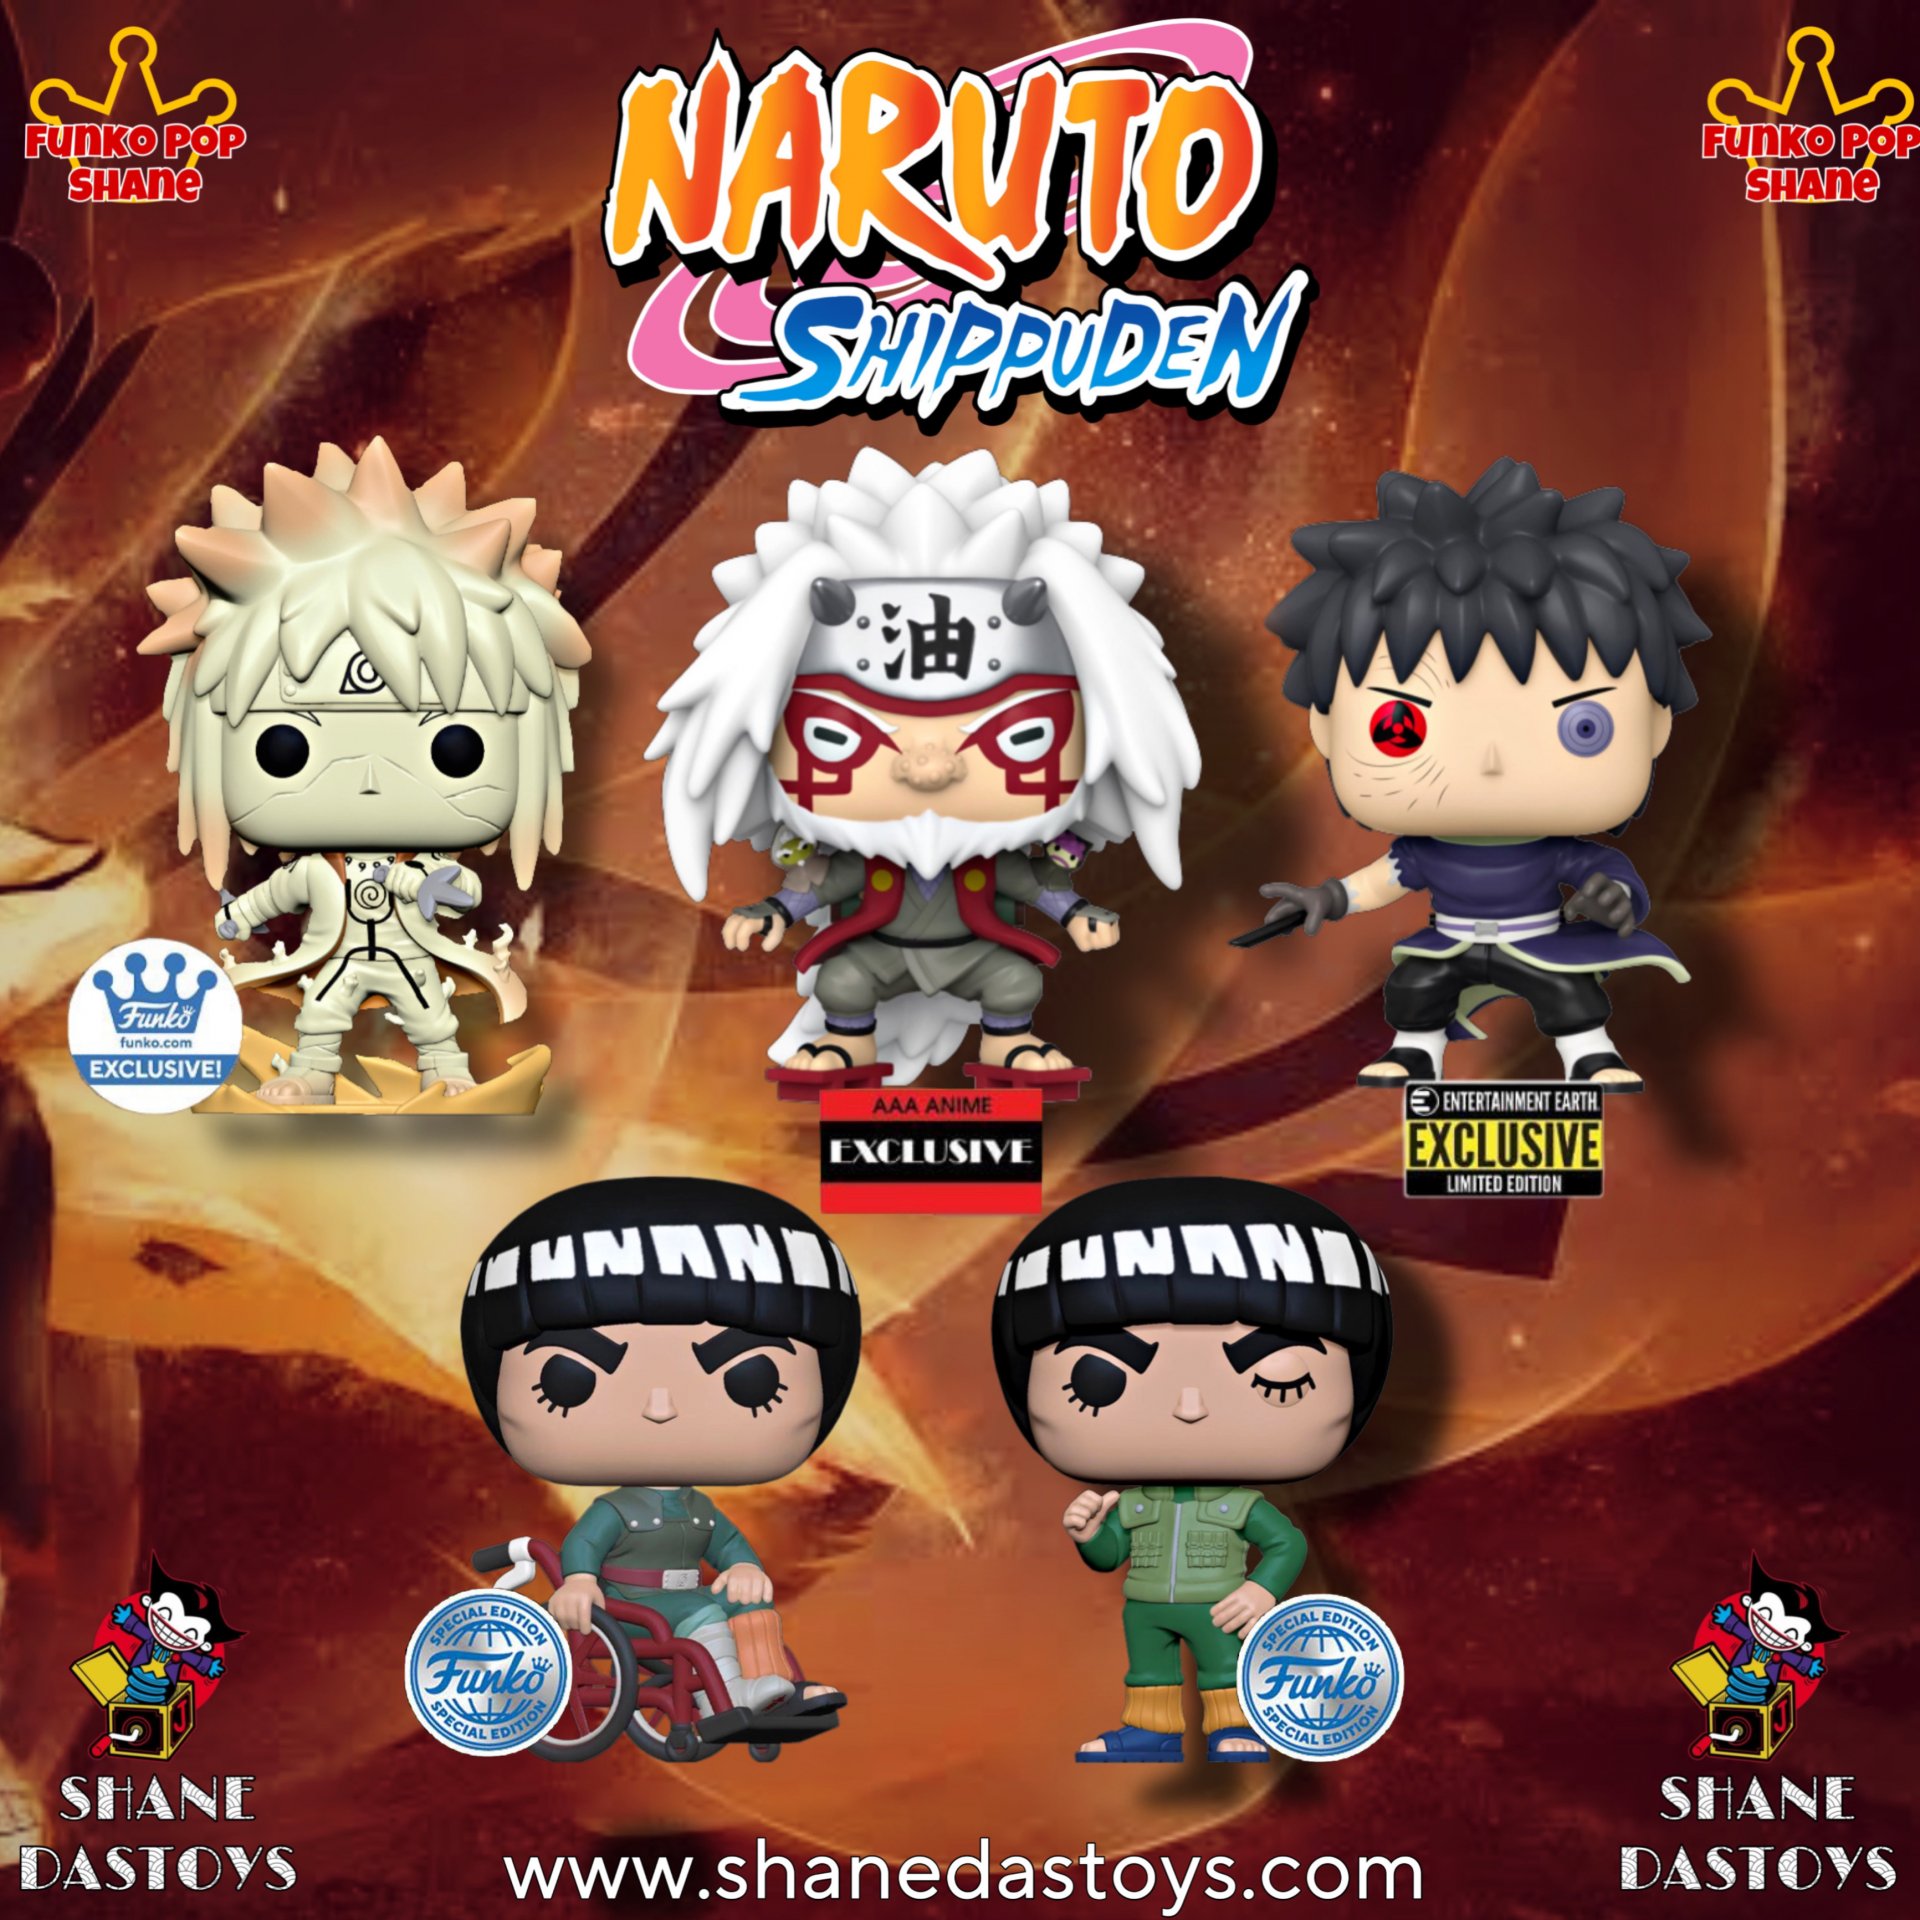 Funko Pop! ANIMATION : Naruto Shippuden